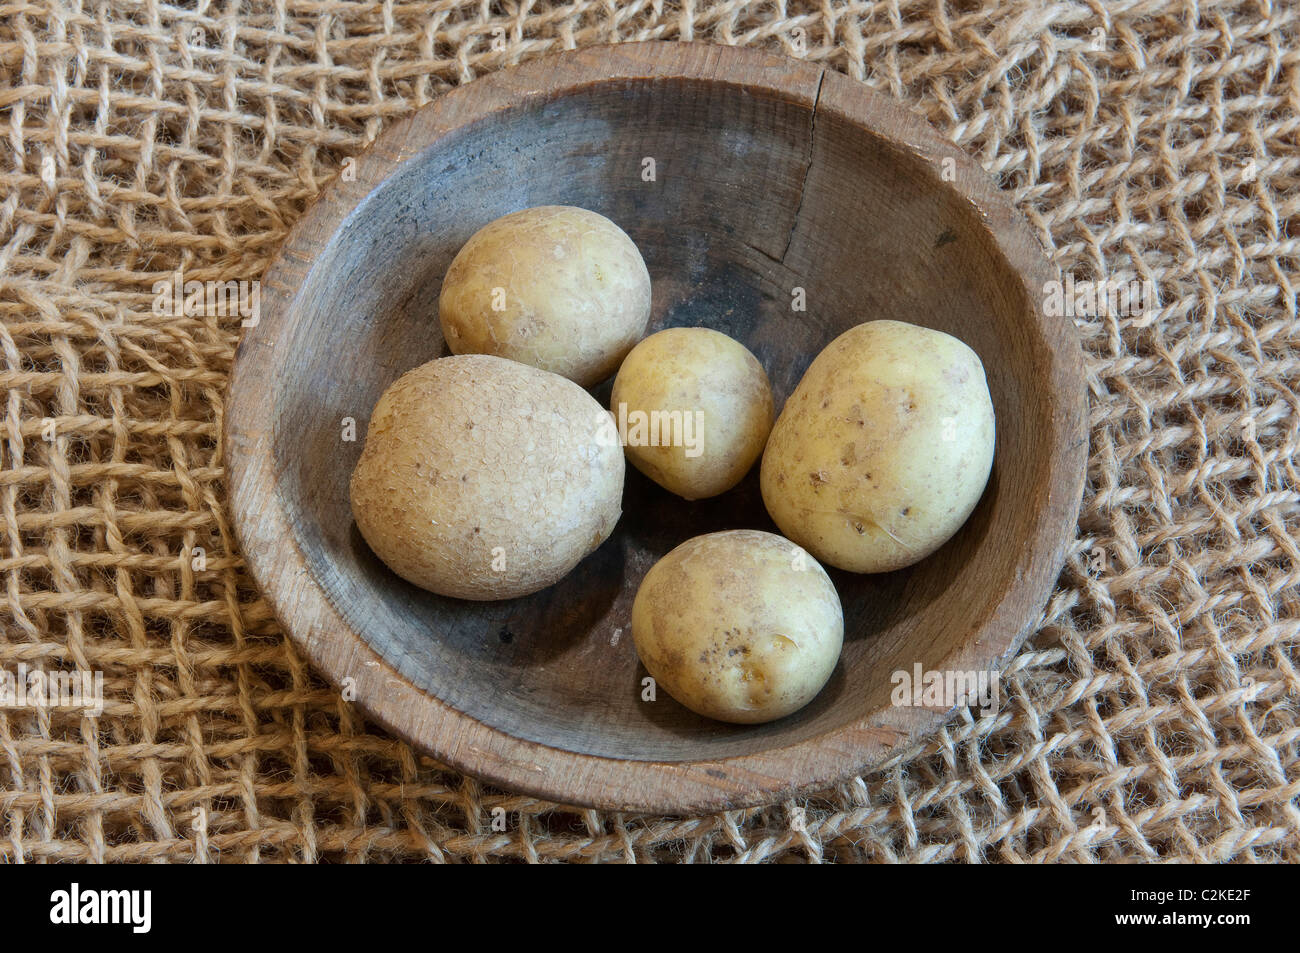 Potato (Solanum tuberosum), variety: Adretta. Potatoes in a wooden bowl. Stock Photo